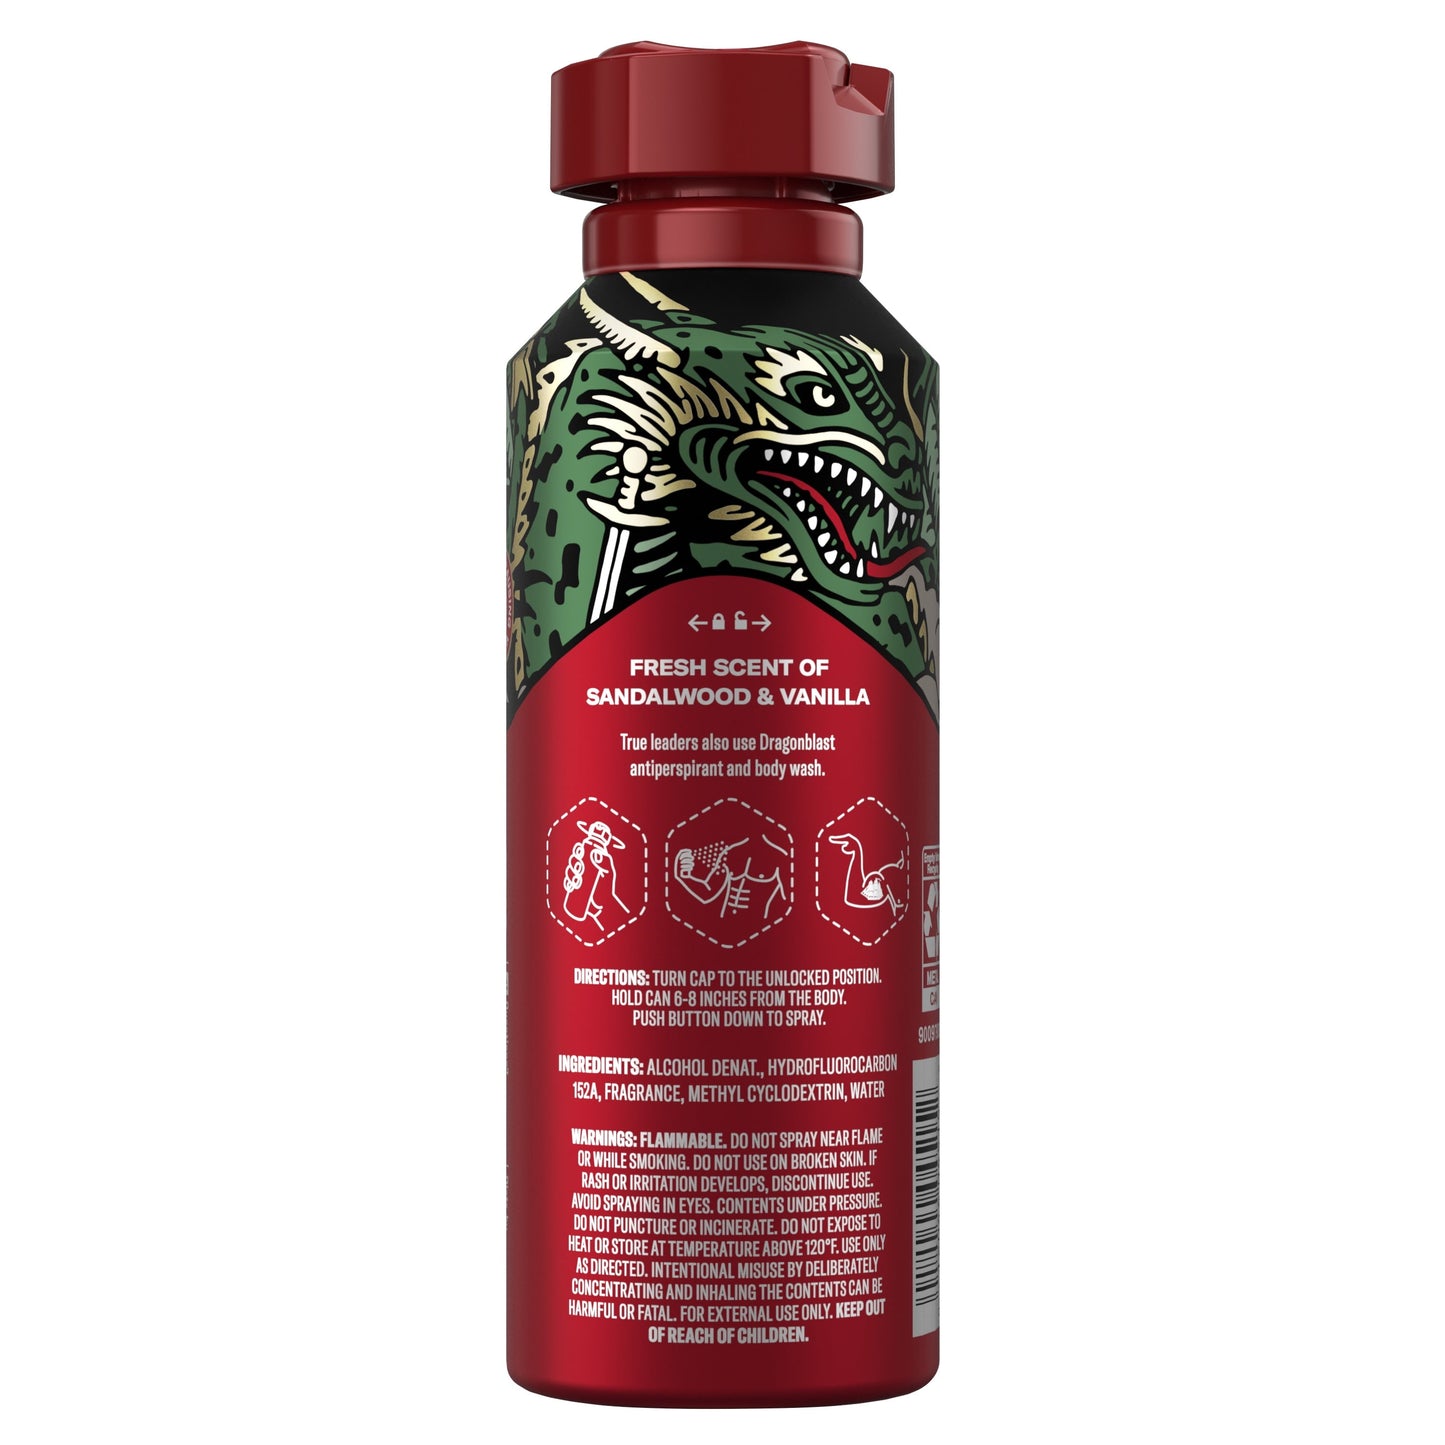 Old Spice Aluminum Free Body Spray for Men, Dragonblast, 5.1 oz